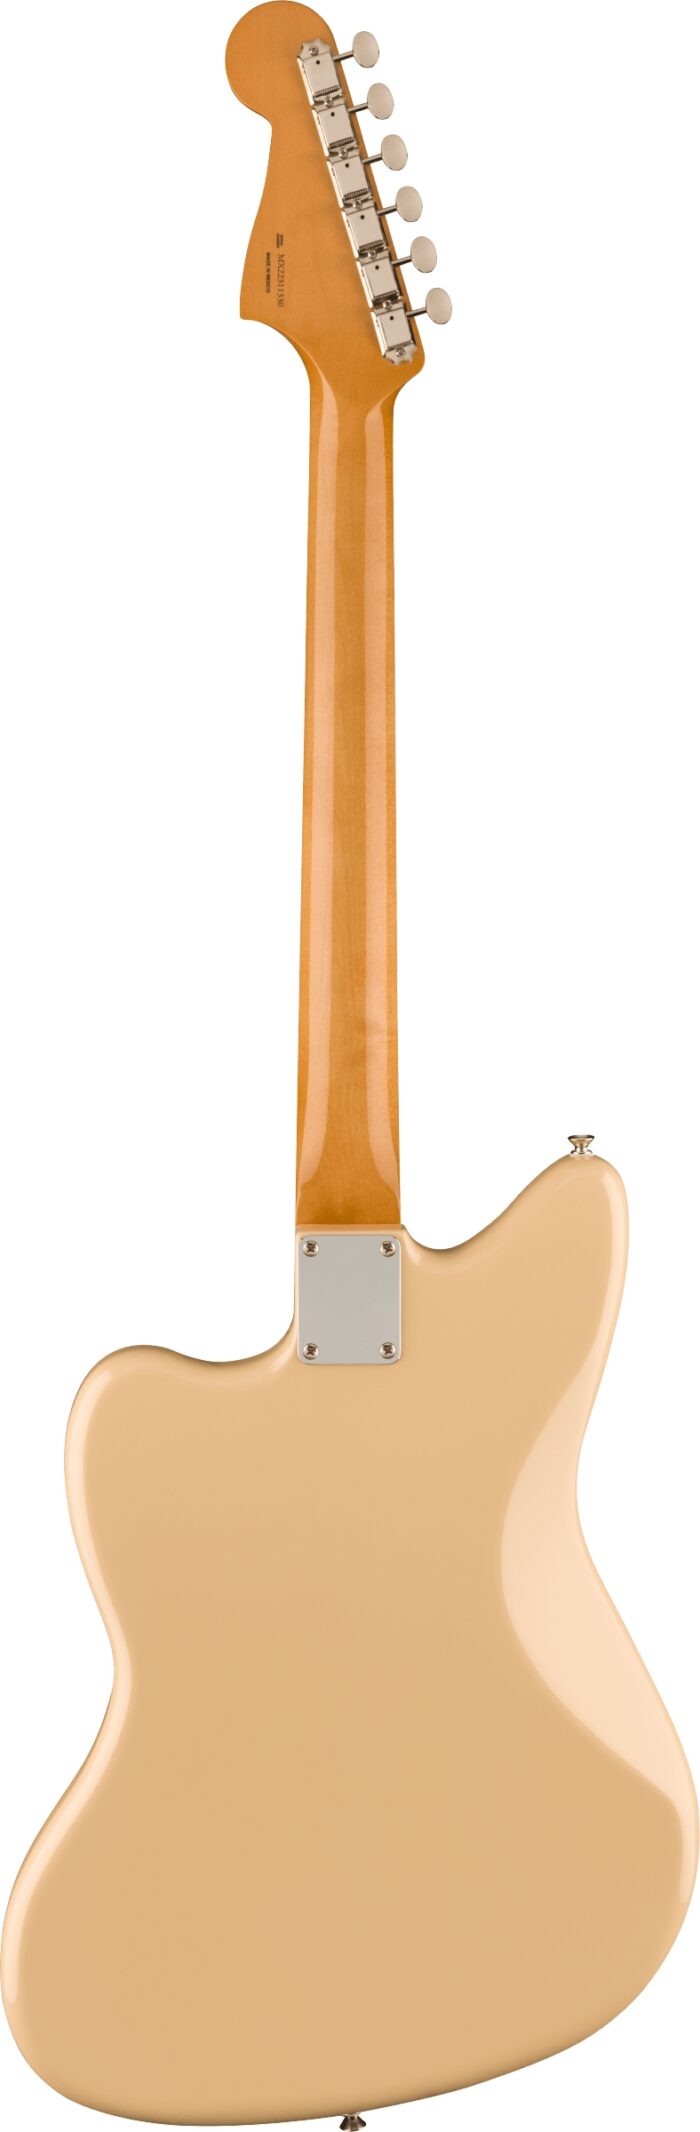 Fender Vintera II 50s Jazzmaster, Rosewood Fingerboard, Desert Sand